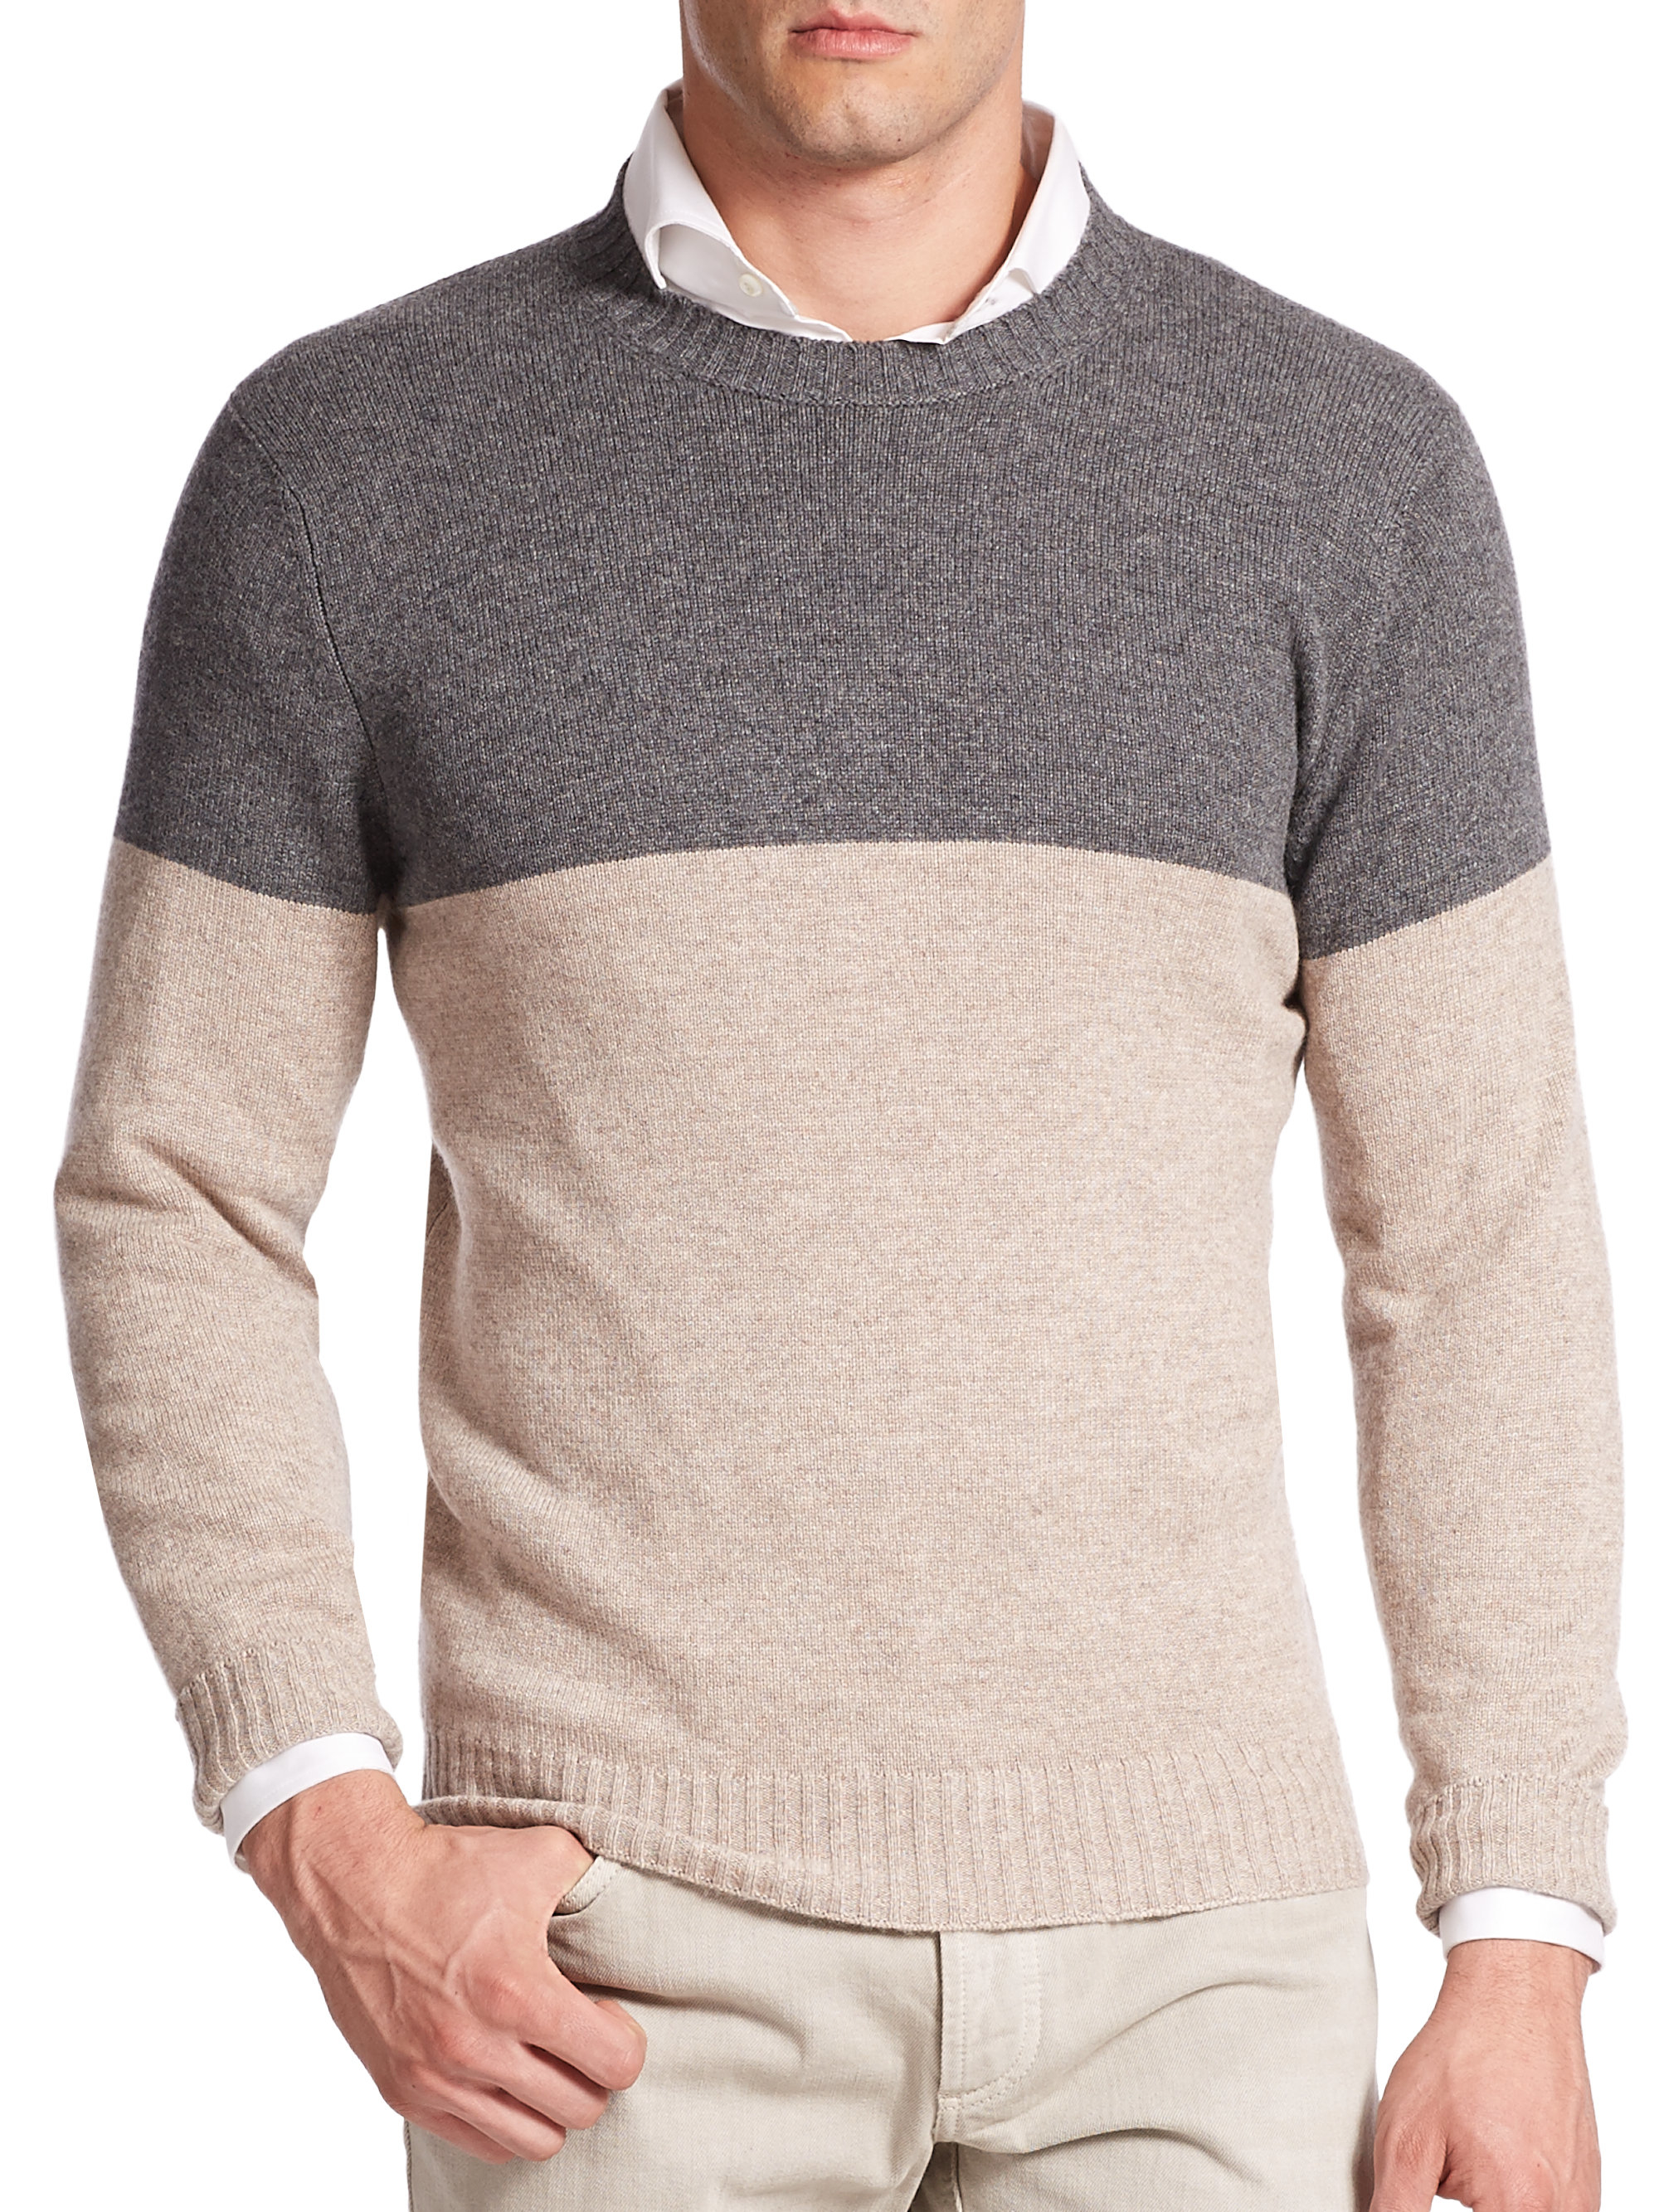 Lyst - Brunello Cucinelli Colorblock Cashmere Sweater in Gray for Men